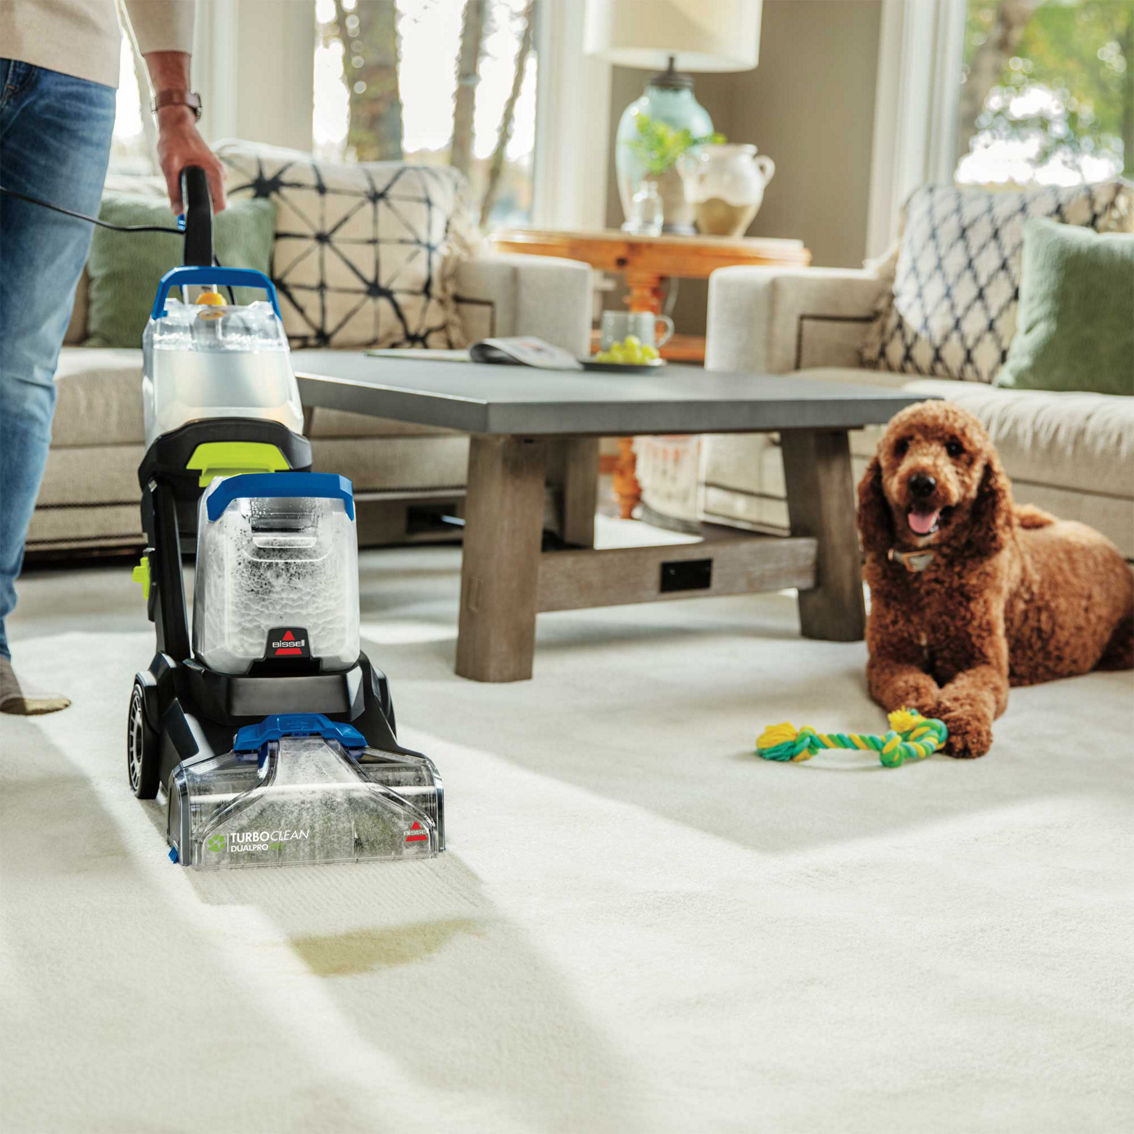 TurboClean DualPro Pet Carpet Cleaner